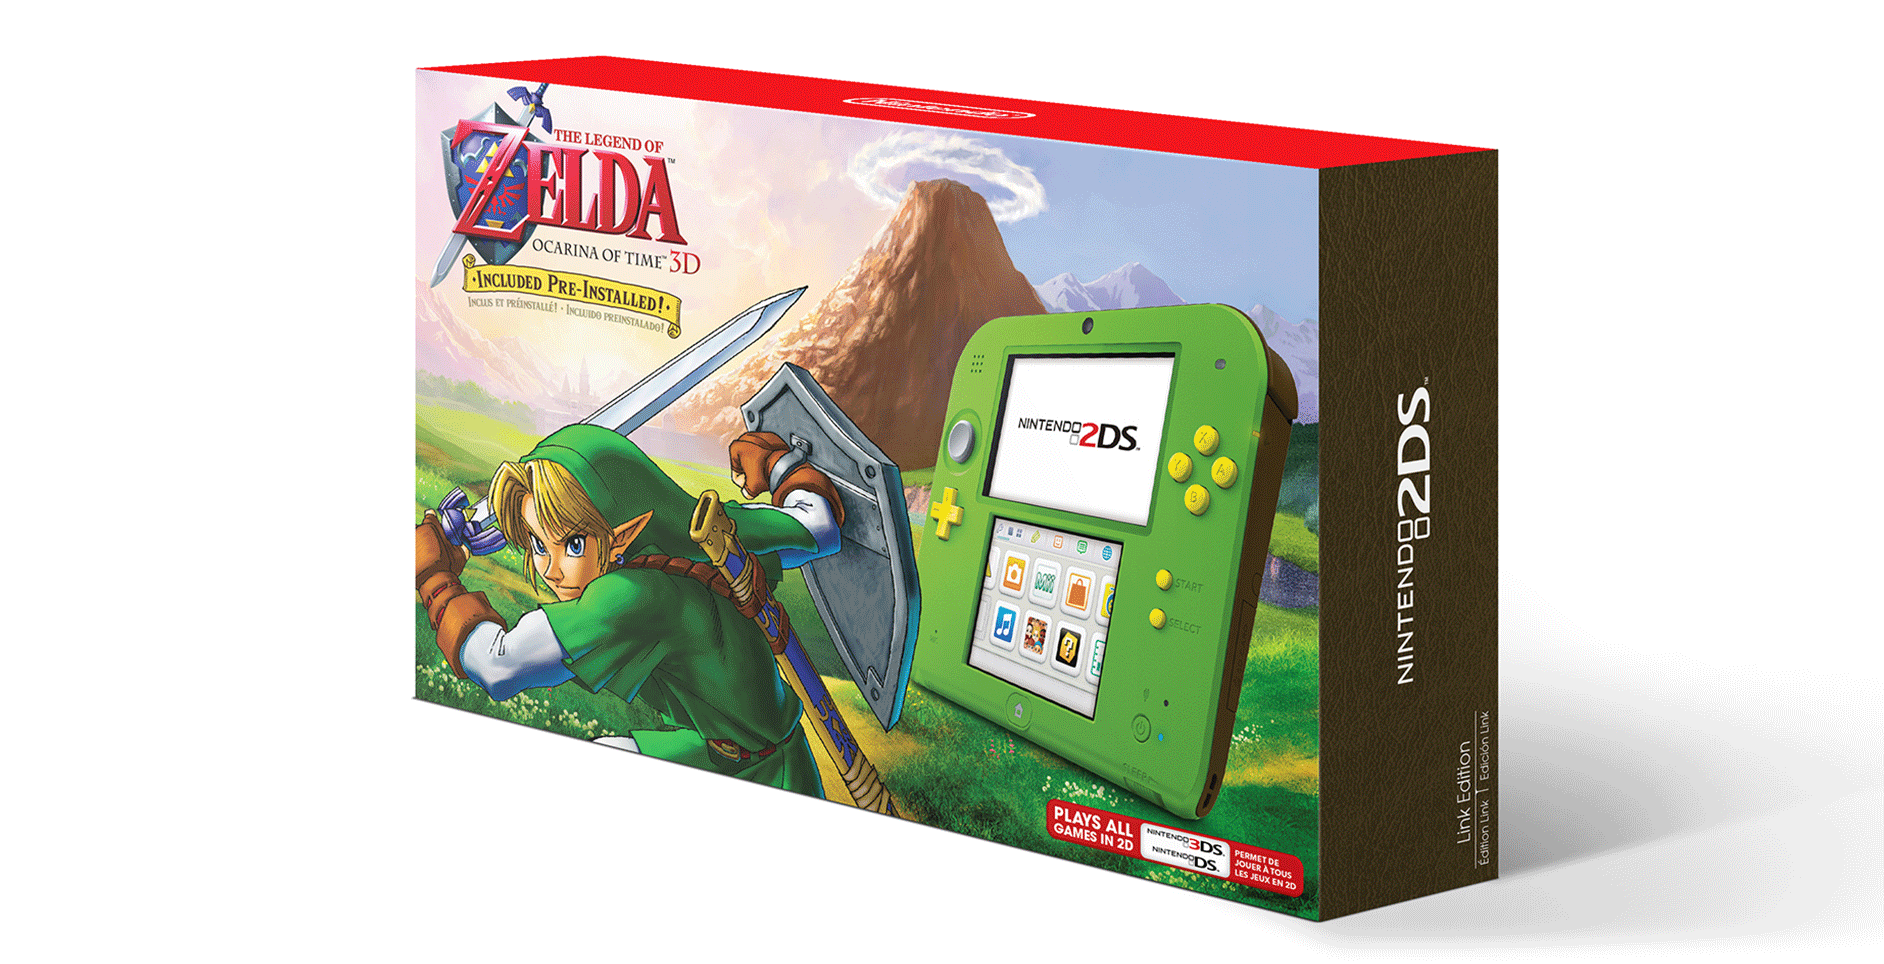 Portail The Legend of Zelda, Jeux